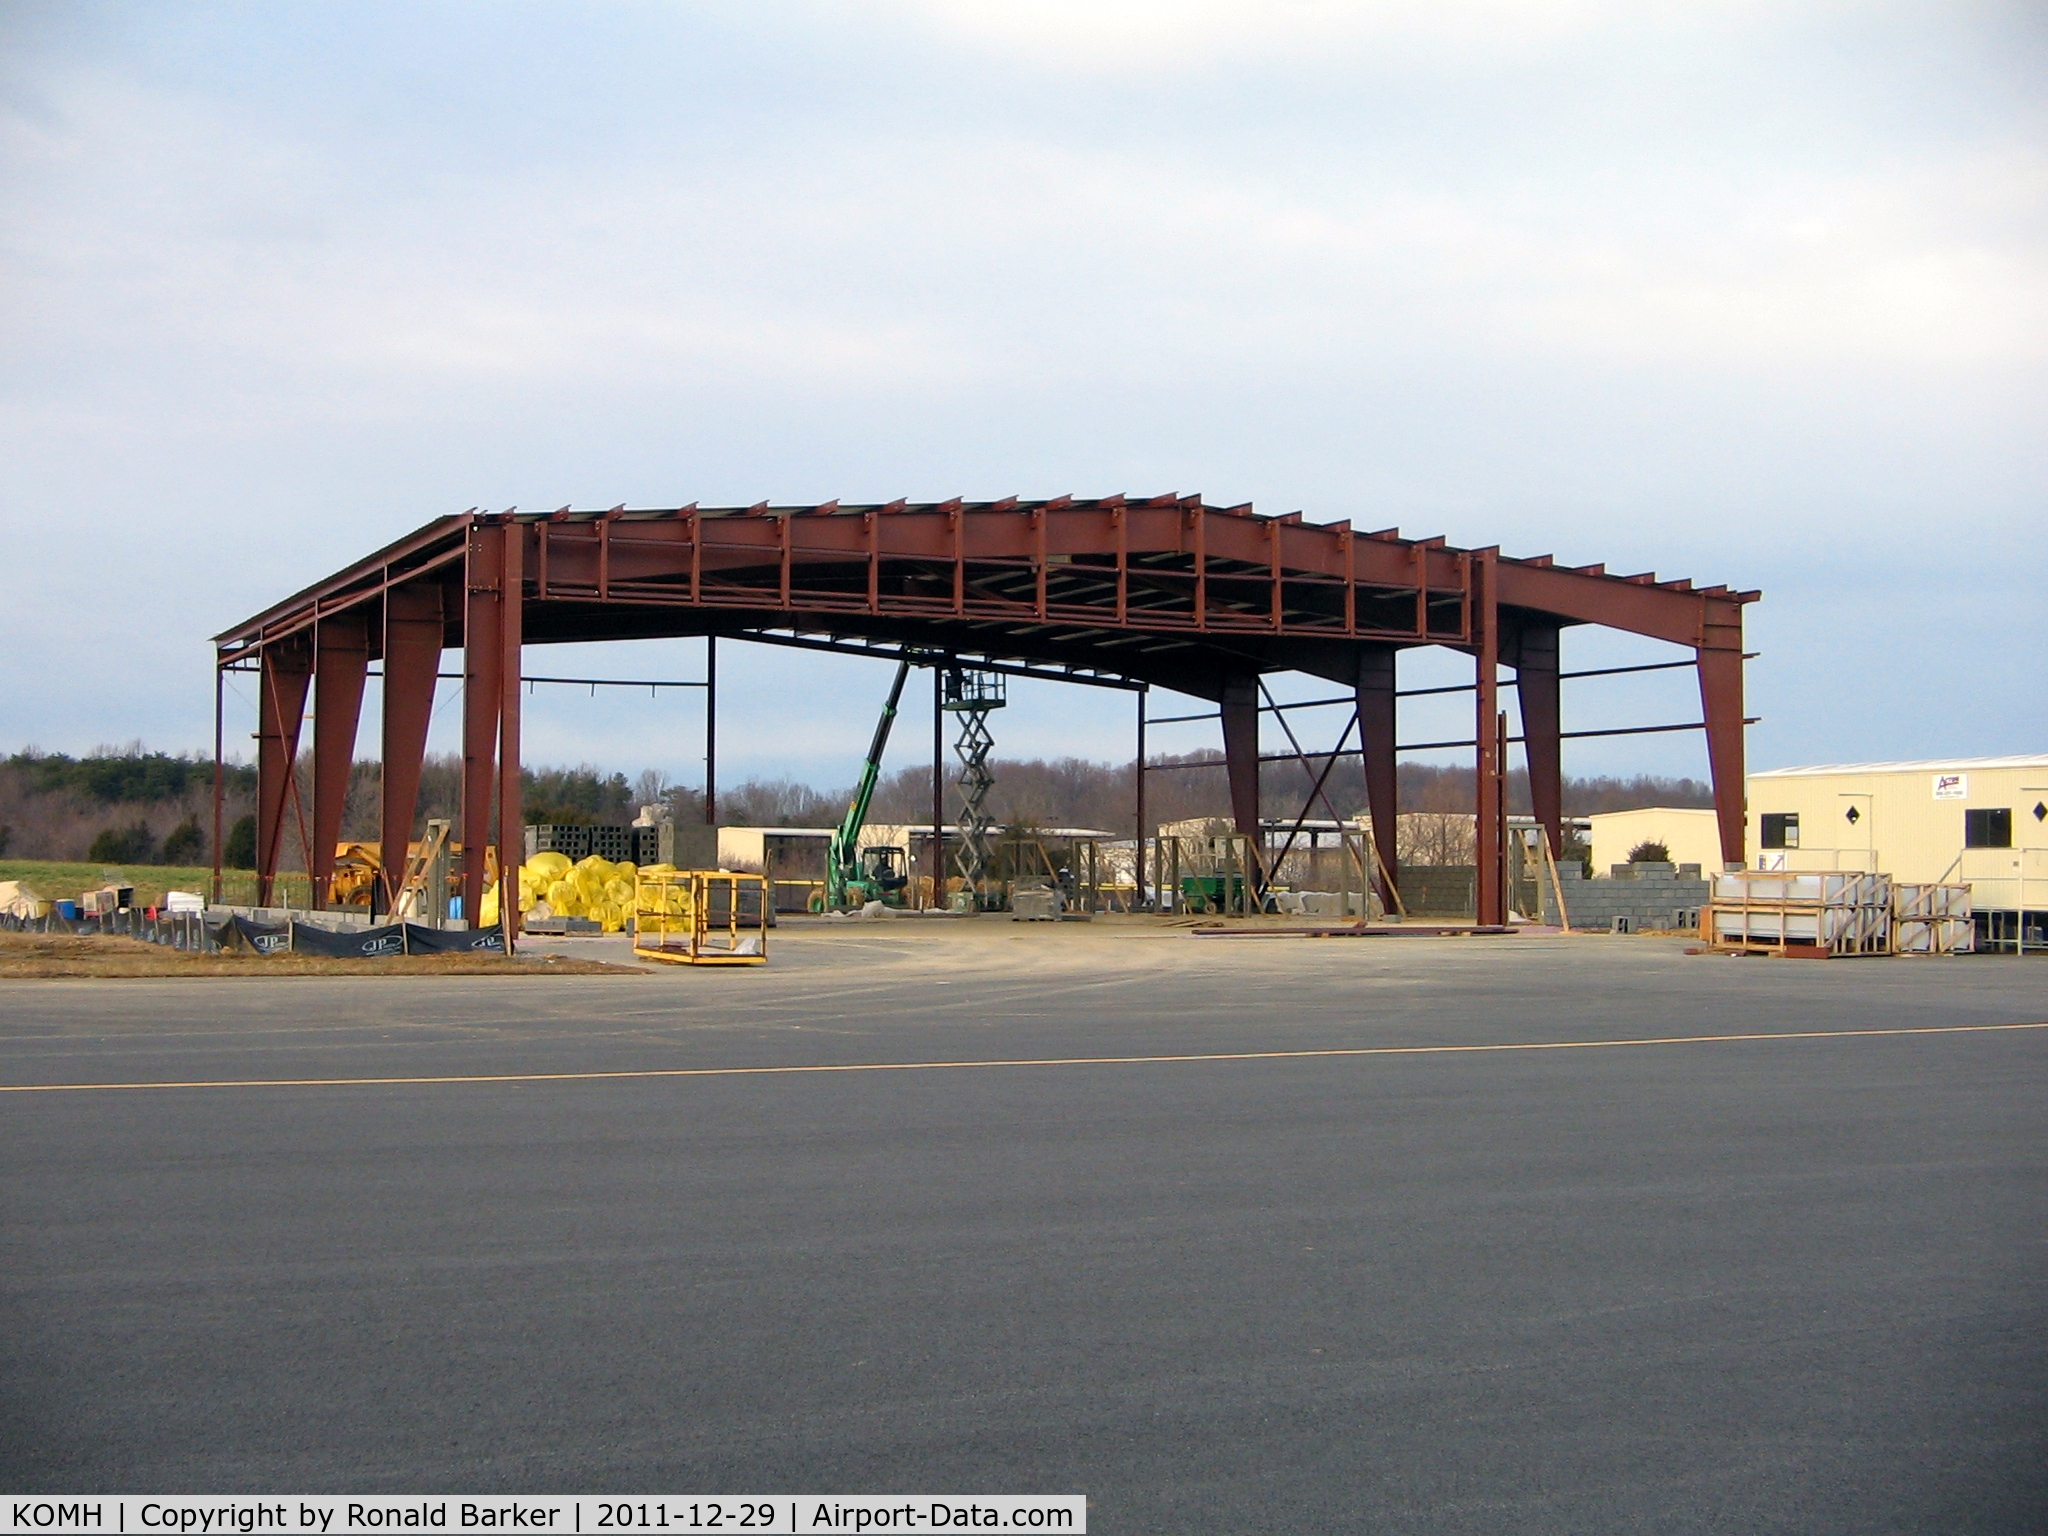 Orange County Airport (OMH) - New Orange skydive building under constructin